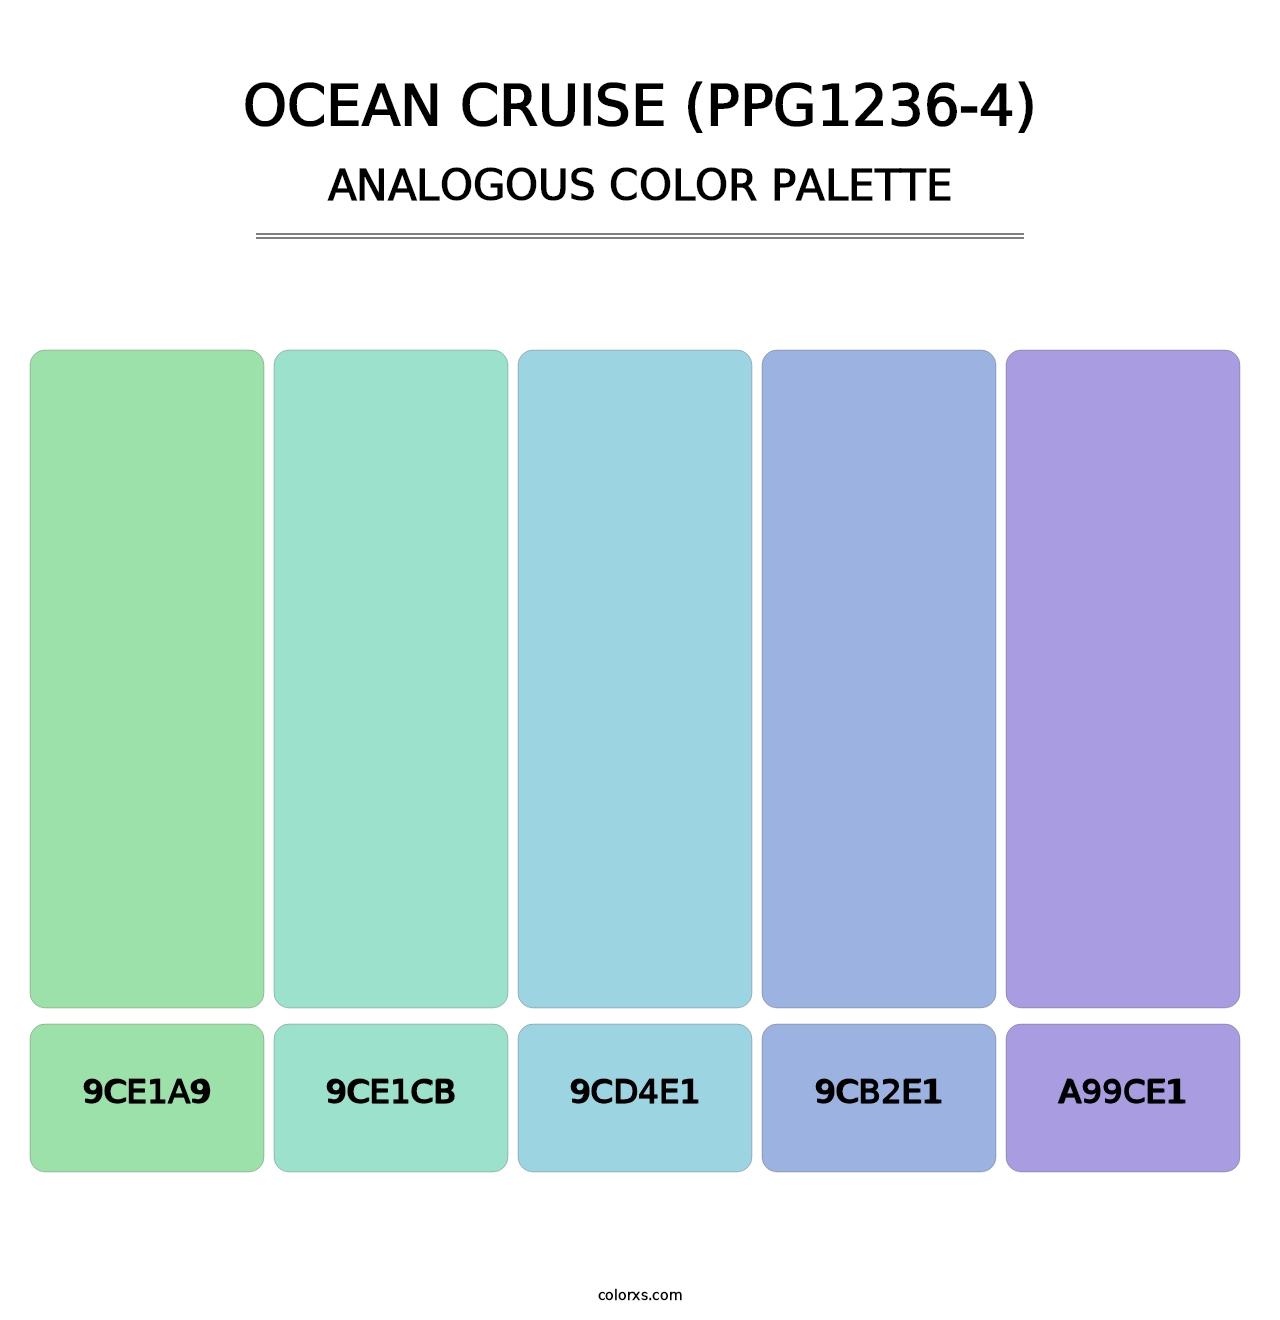 Ocean Cruise (PPG1236-4) - Analogous Color Palette